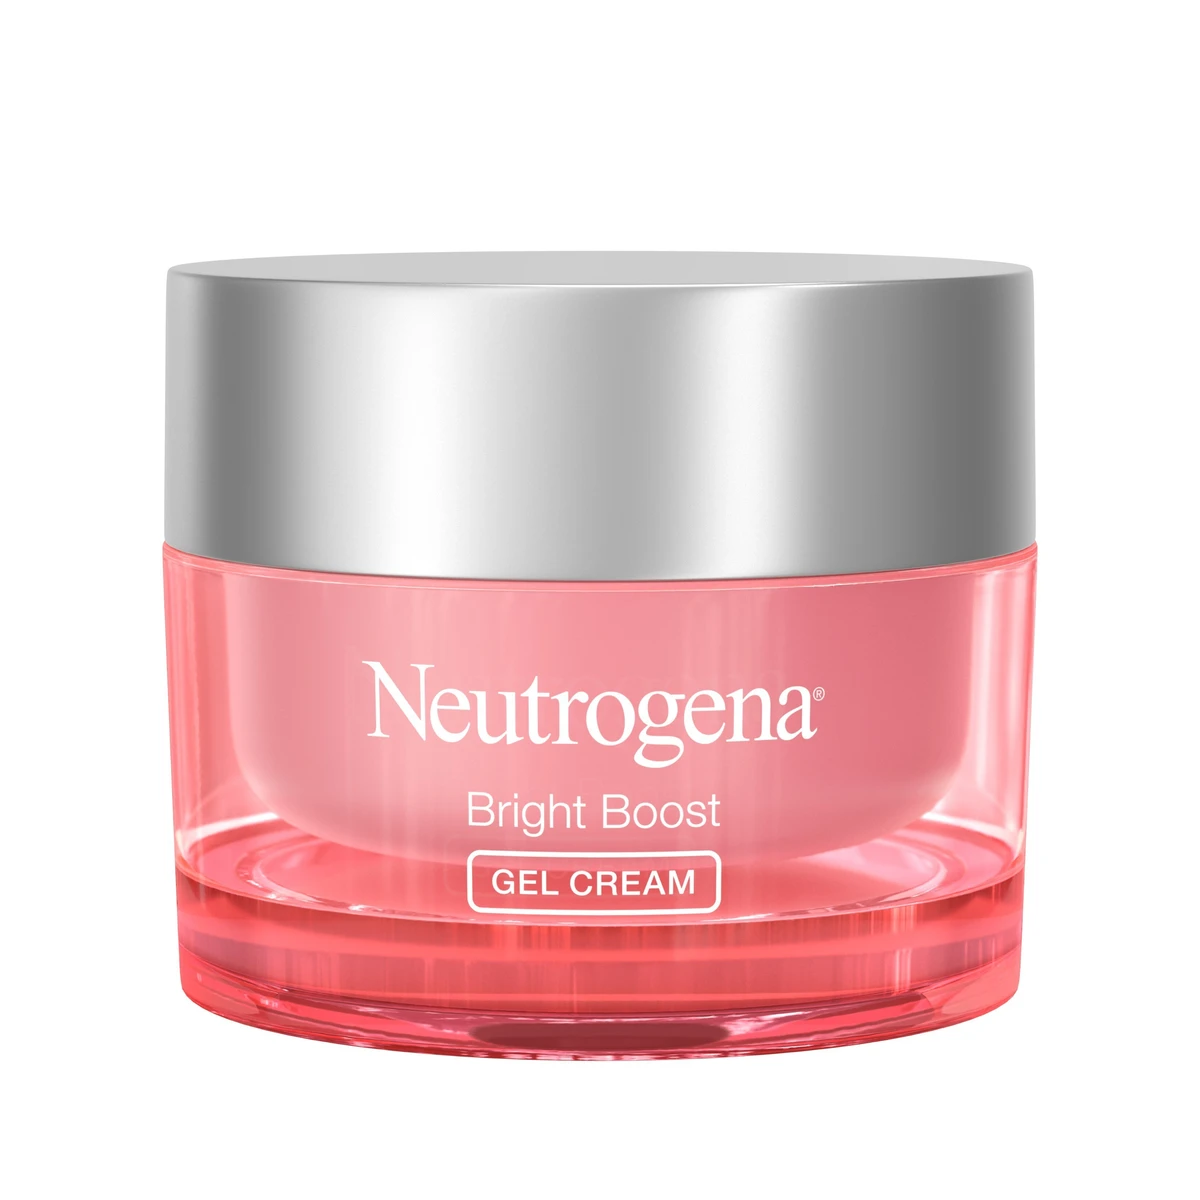 Neutrogena Bright Boost Gel Cream  1.7 fl oz